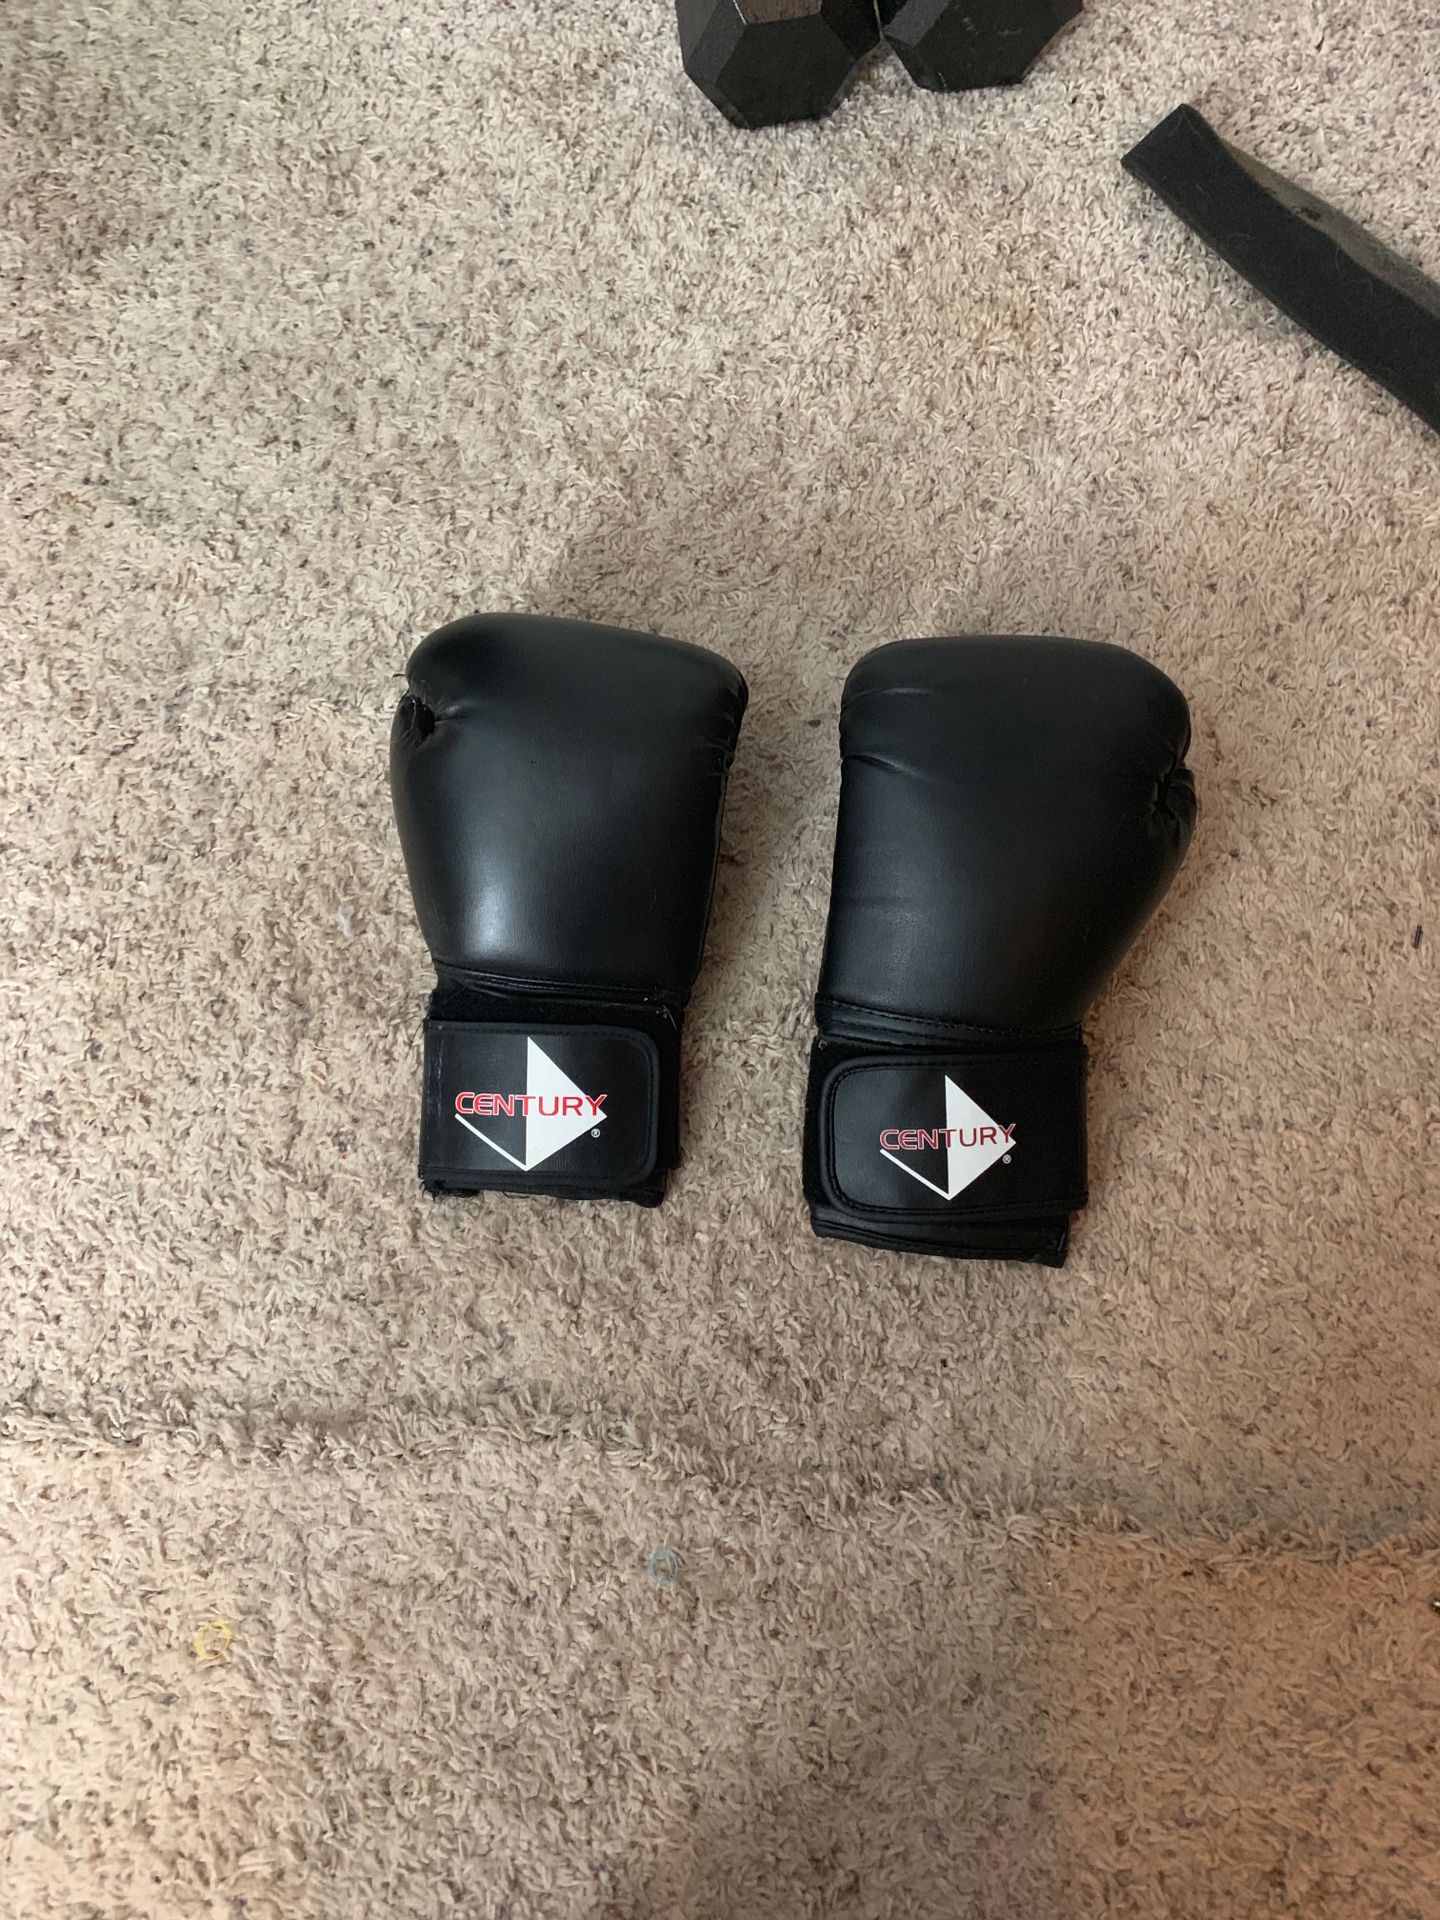 Century boxing gloves